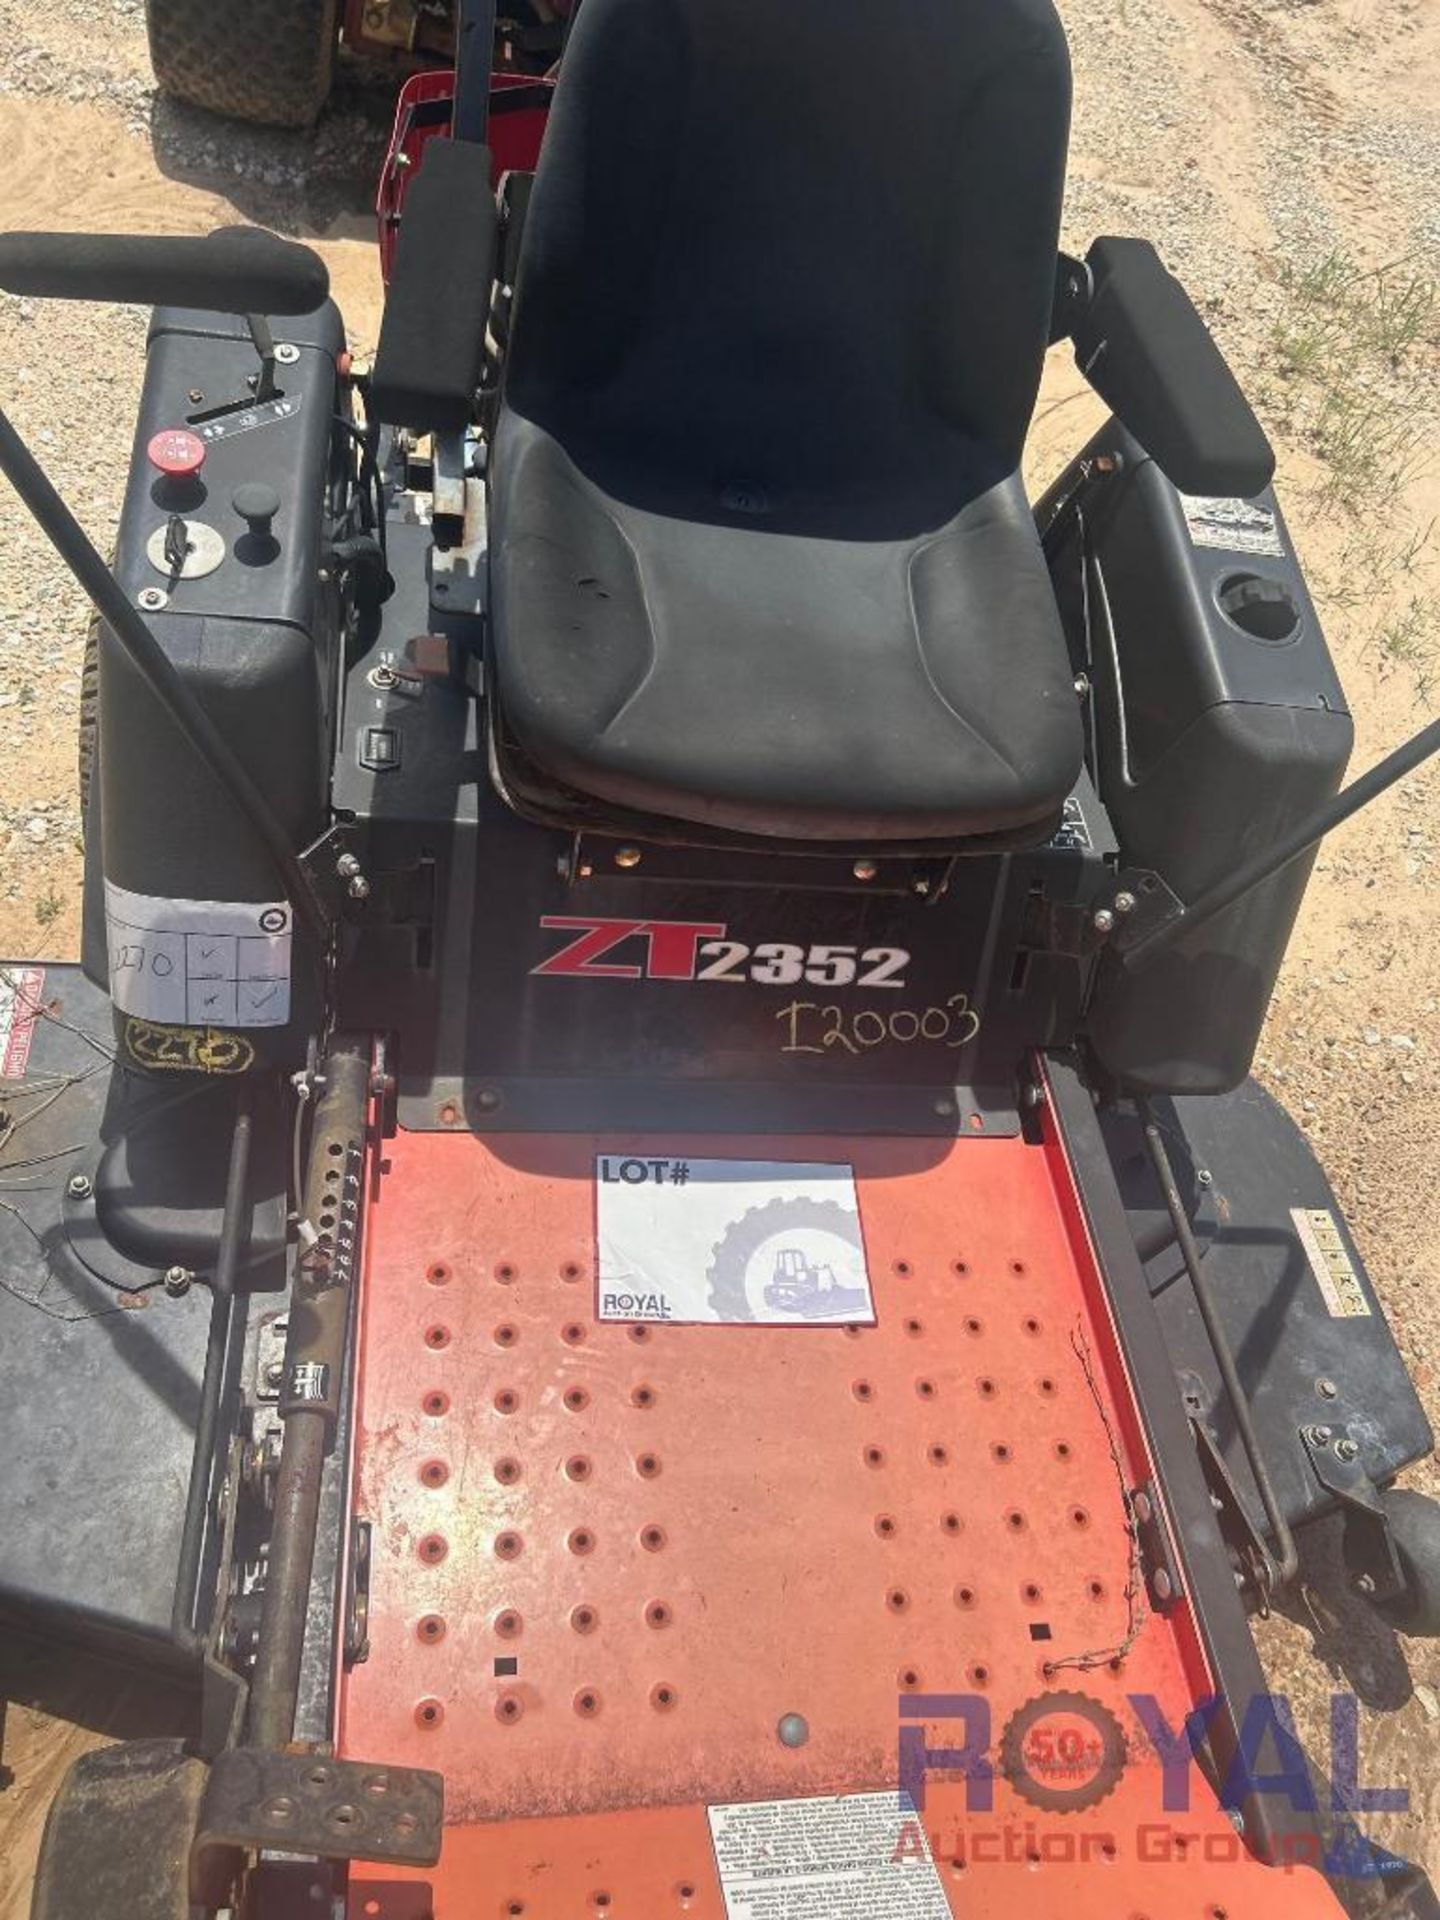 52in Gravely ZT2352 Zero Turn Mower - Image 10 of 11